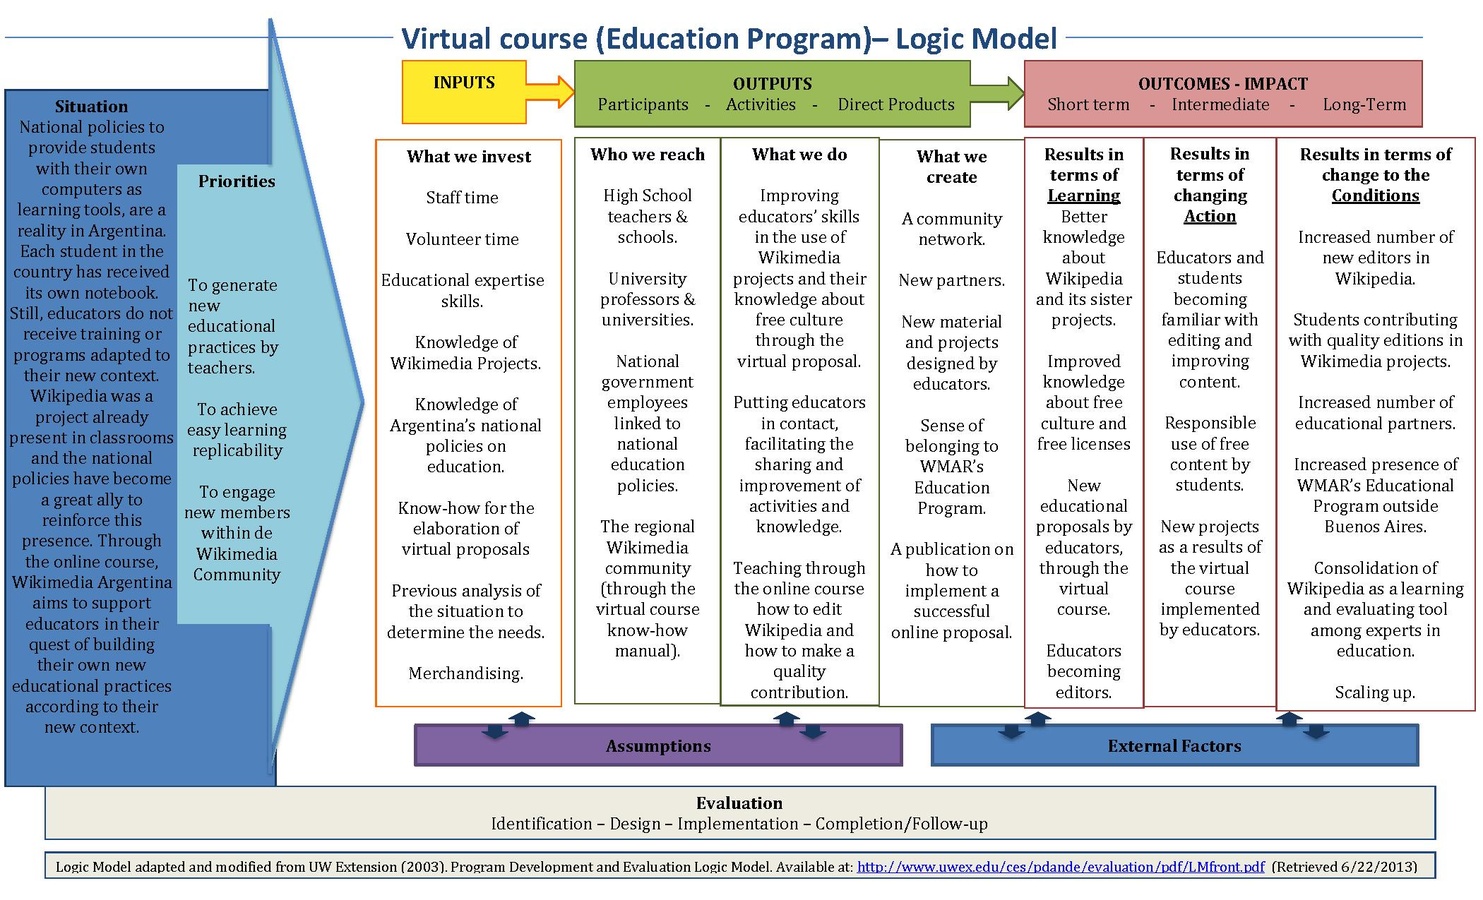 Virtual course Logic Model